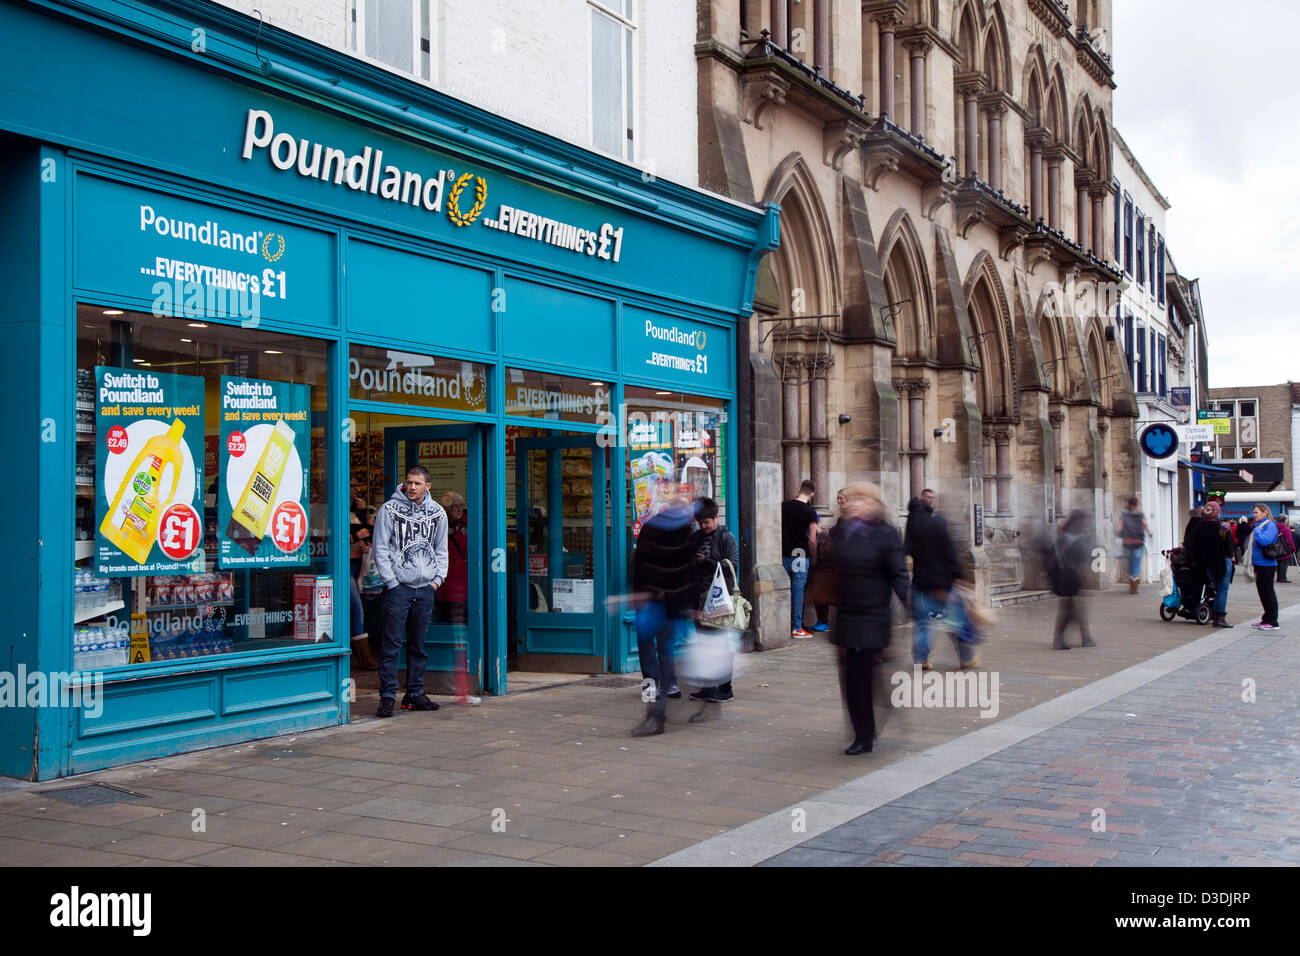 Poundland store in Darlington City Centre, Yorkshire, UK Stock Photo